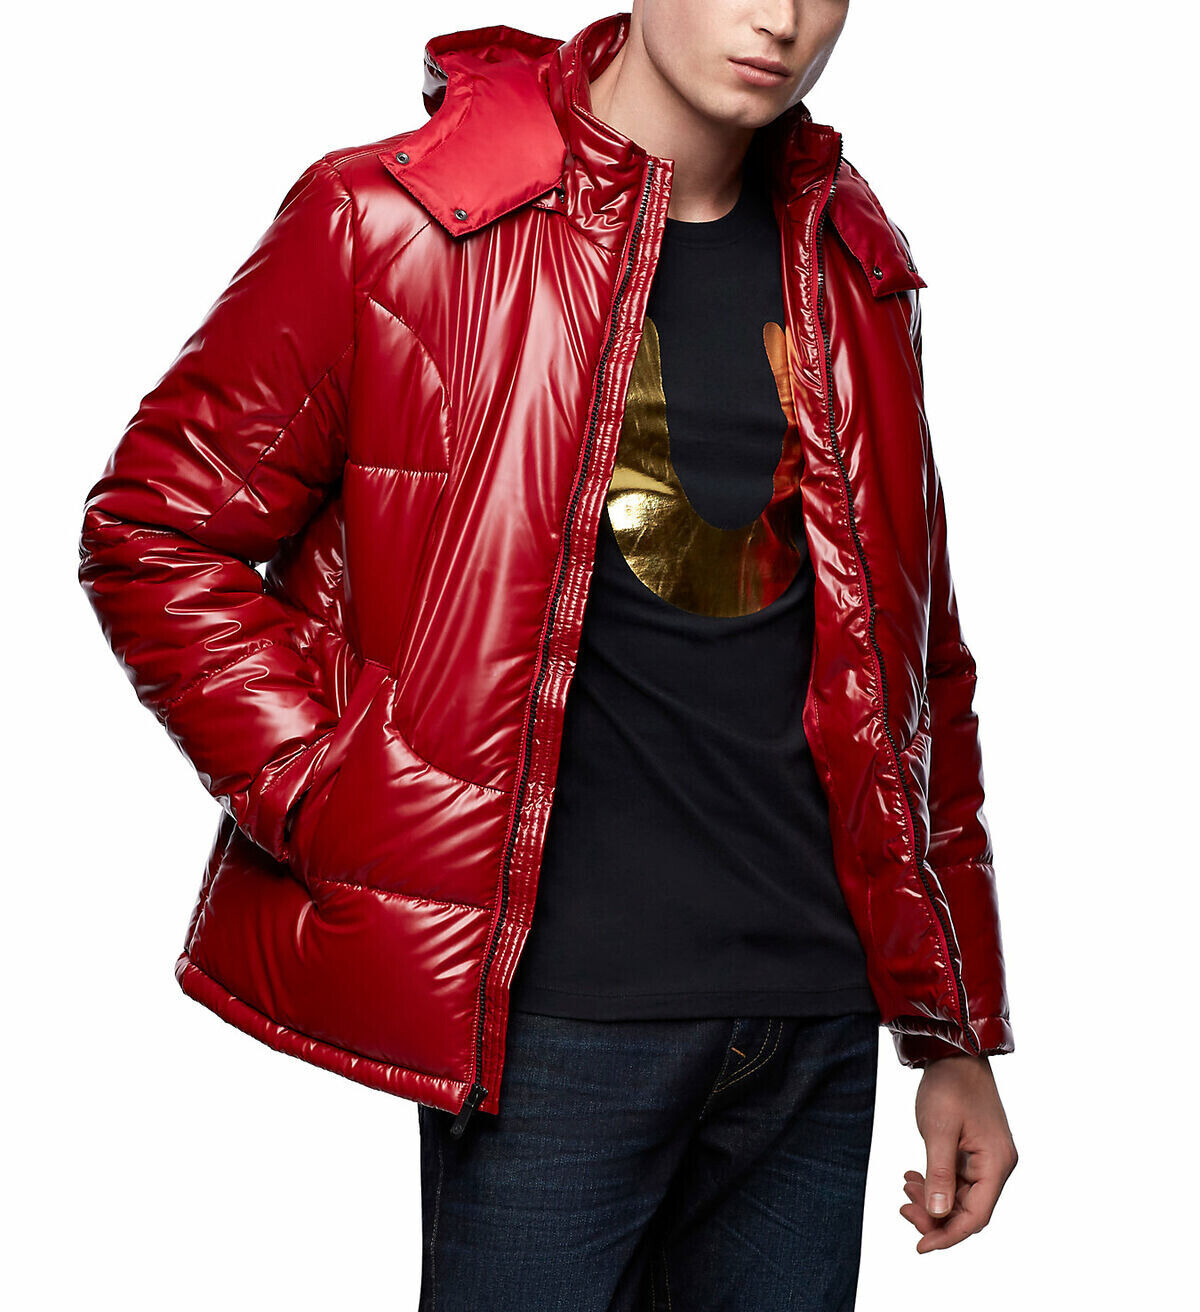 True Religion Menu0026#039;s Ruby Red Shiny Hooded Puffer Jacket $279 | eBay